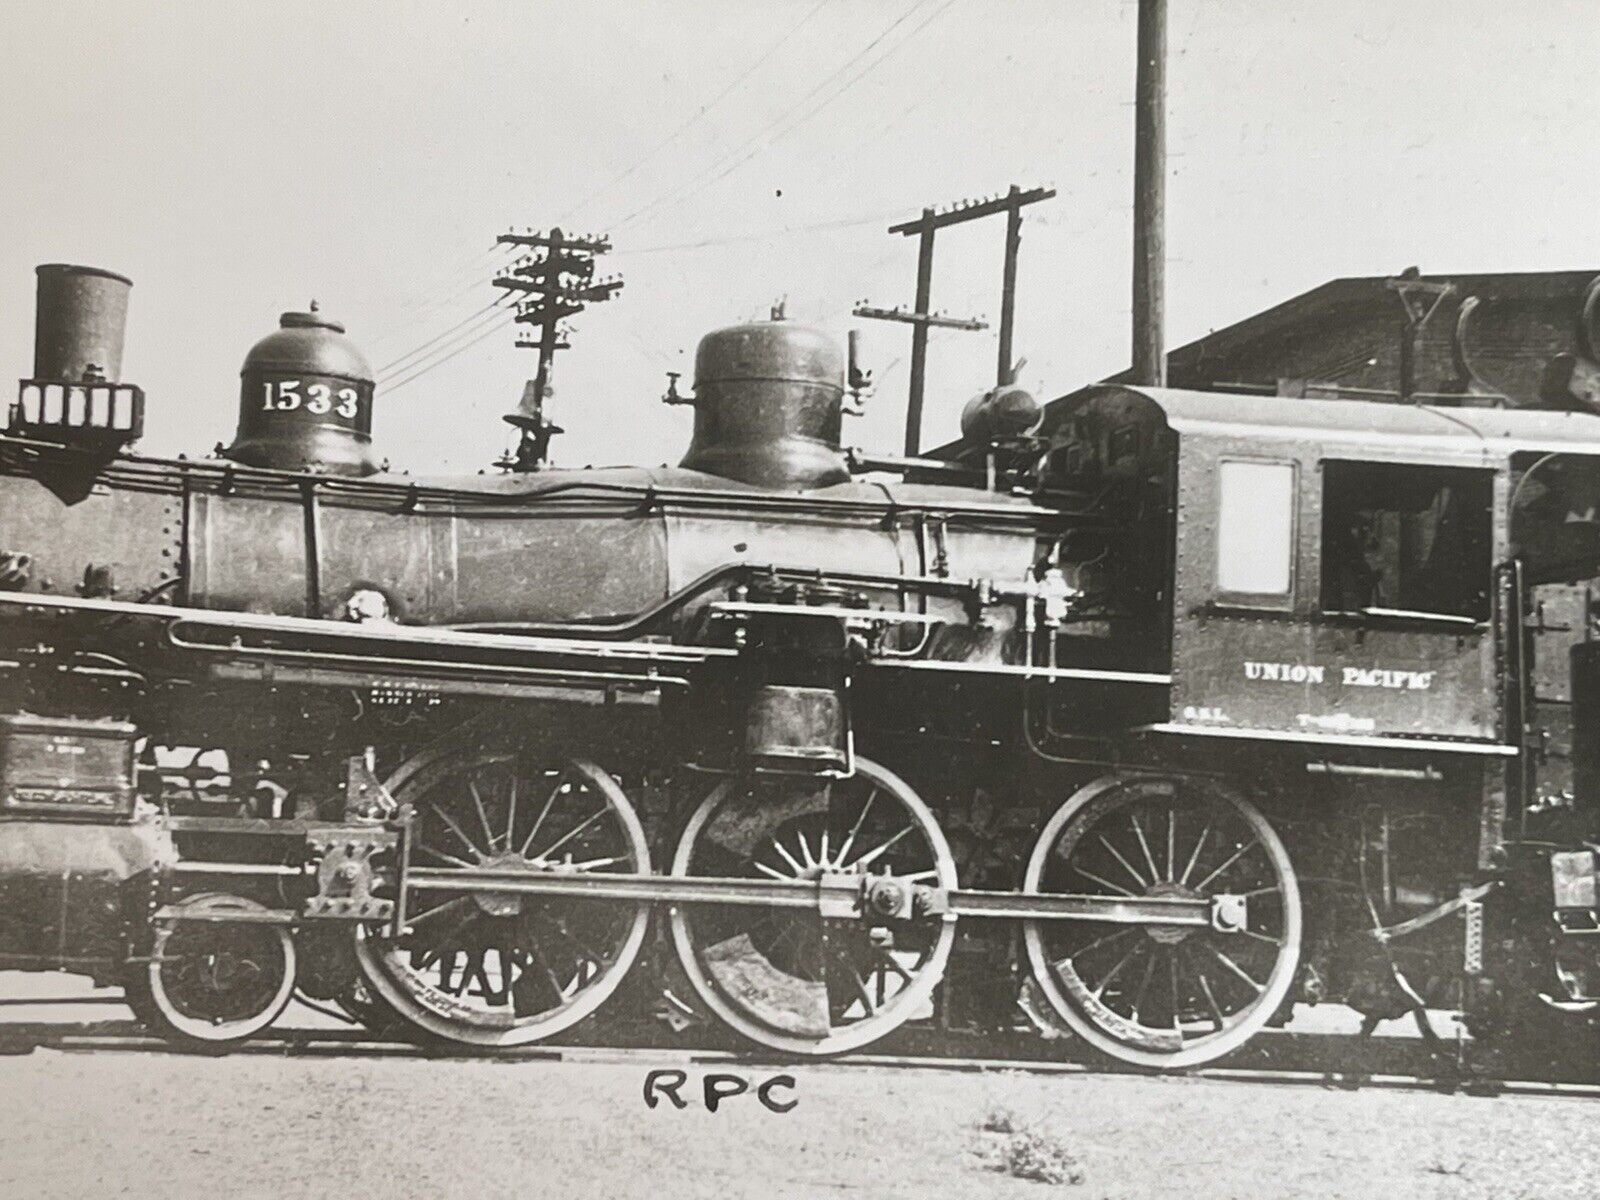 Vintage Real Photo 1891 Cooke Built Locomotive Steam Engine Union Pacific #1533